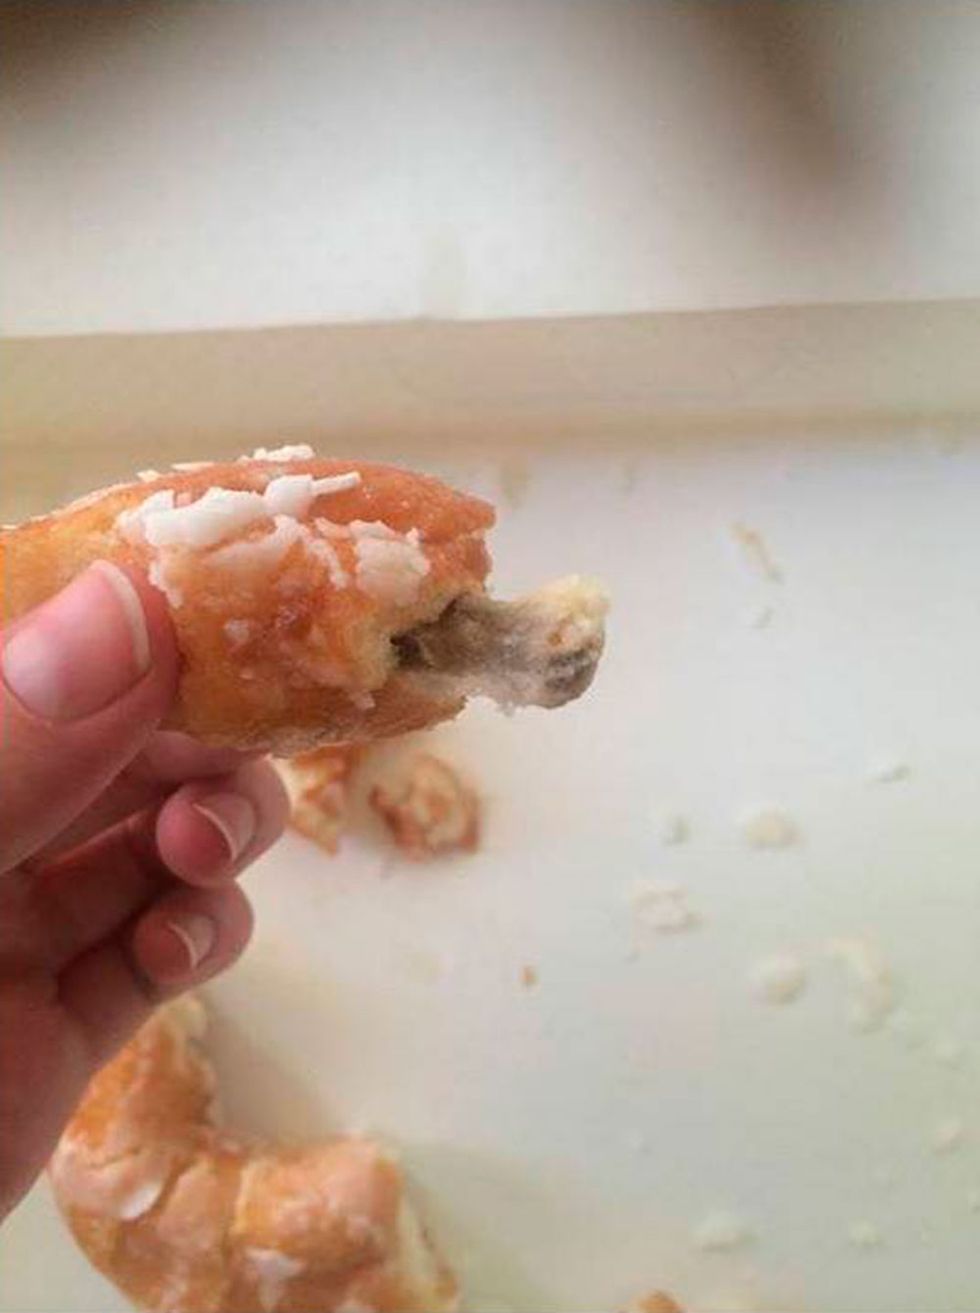 Woman finds a cigarette inside her Krispy Kreme donut